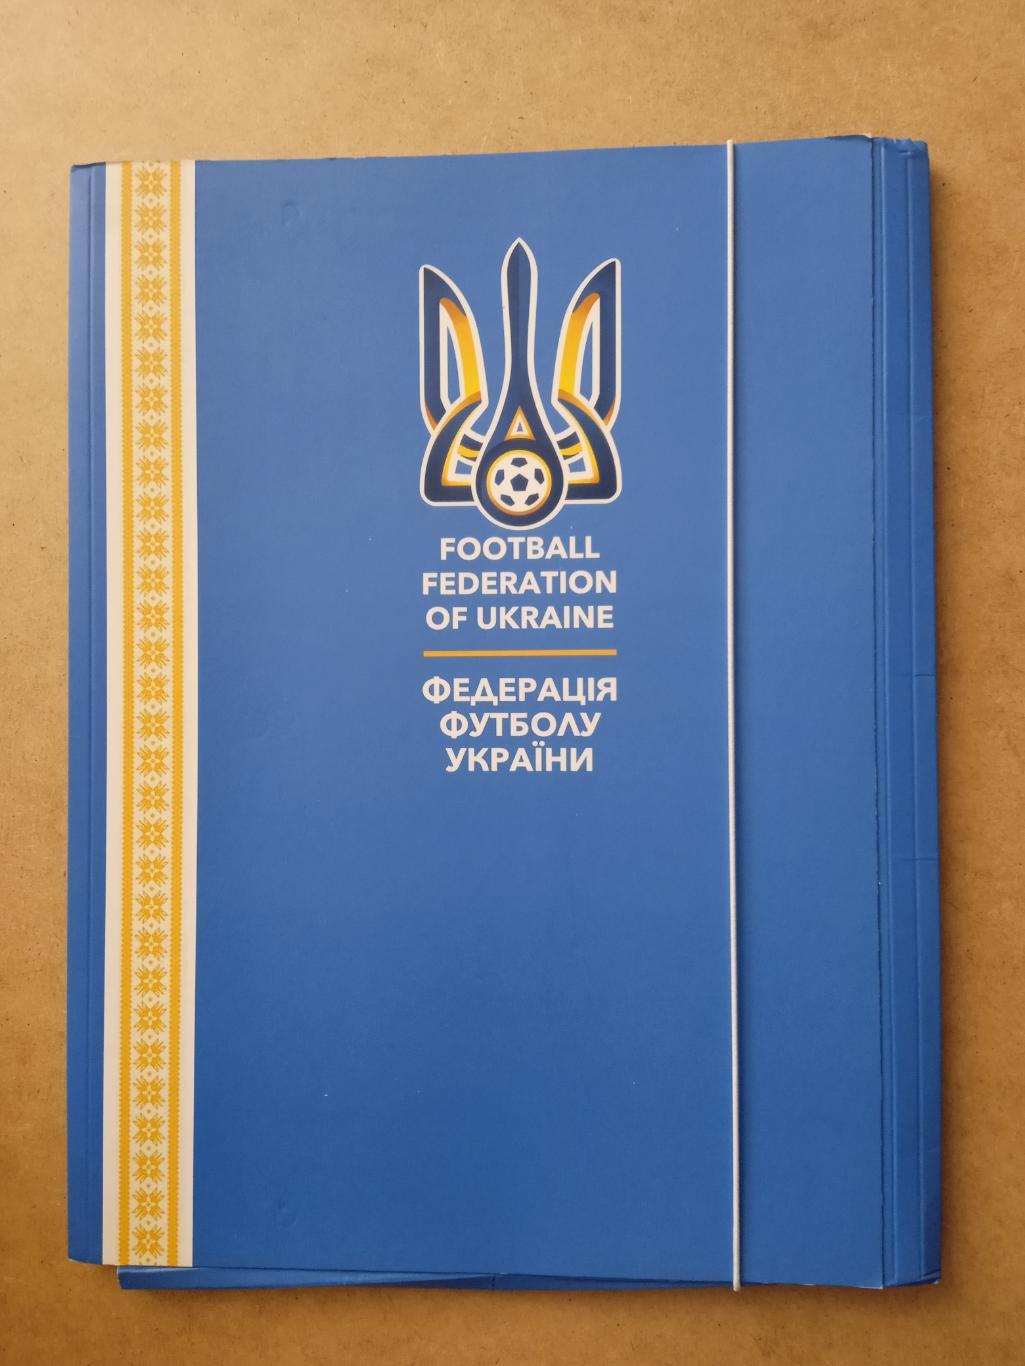 футбол.Украина, федерация футбола (офиц.папка).